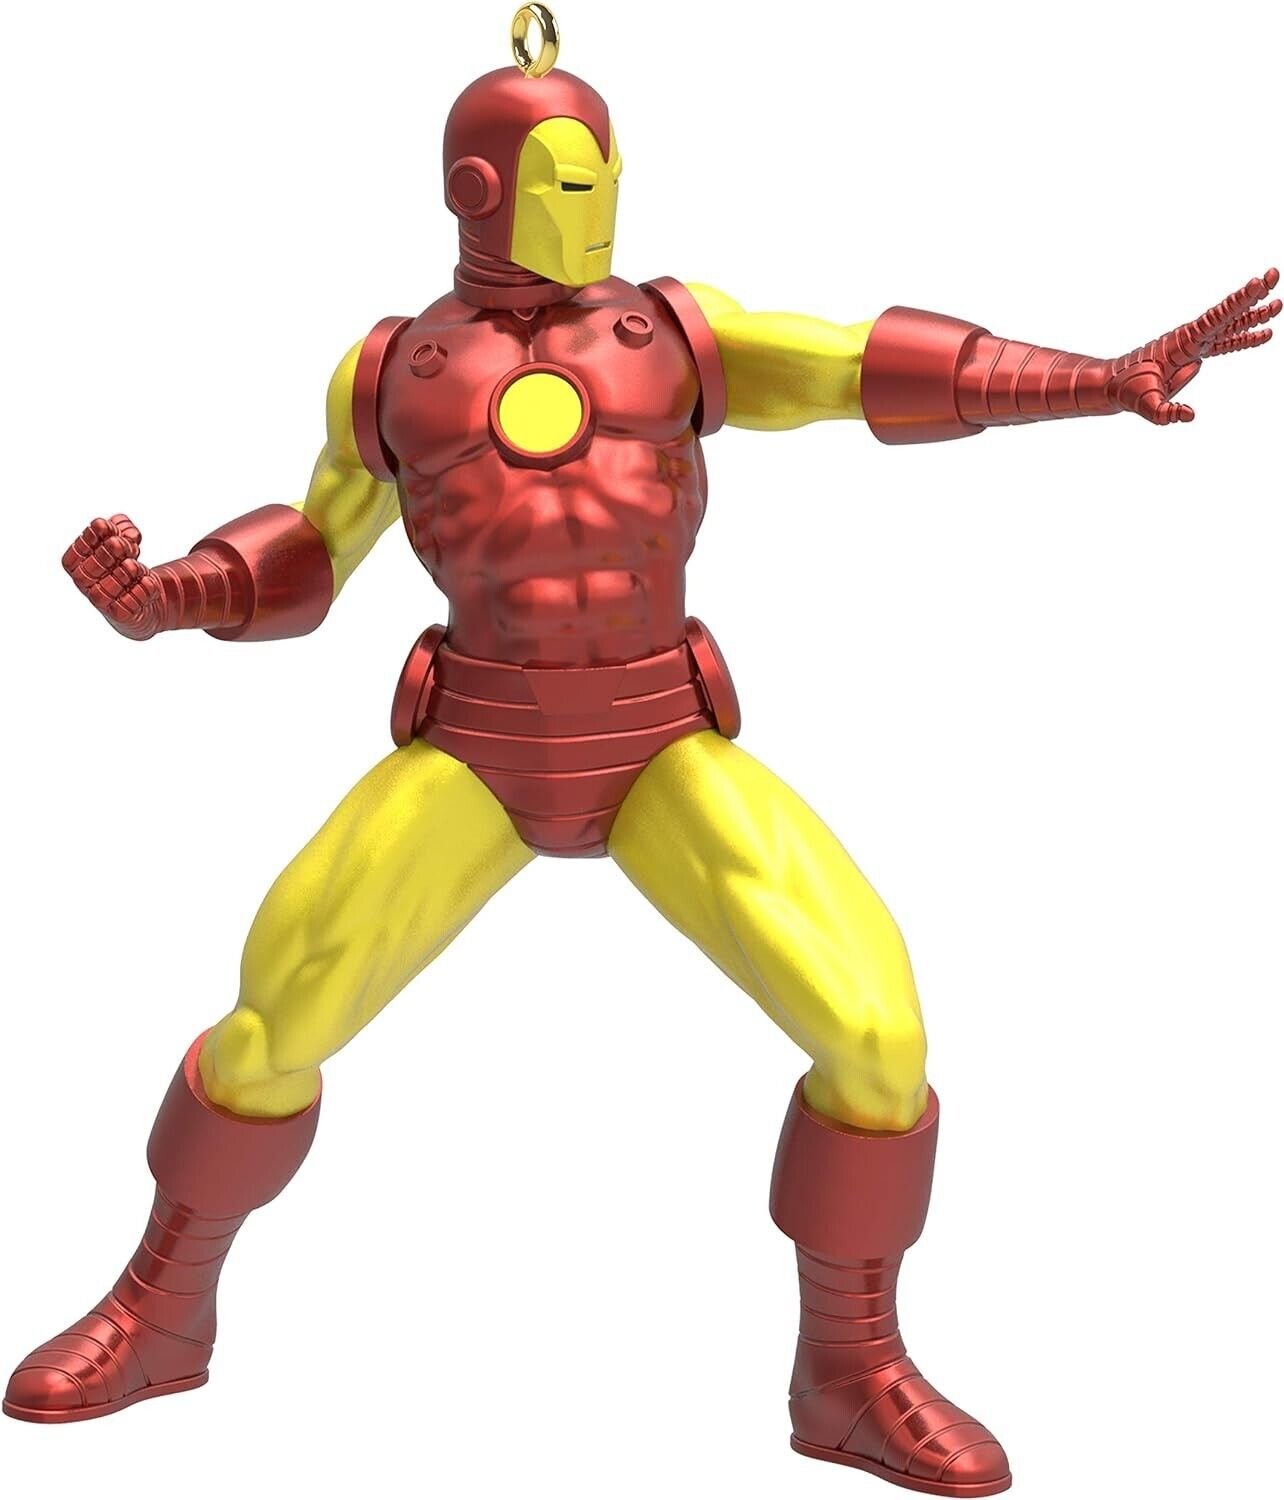 2019 Premium Metal Iron Man Marvel Avenger Hallmark Ornament